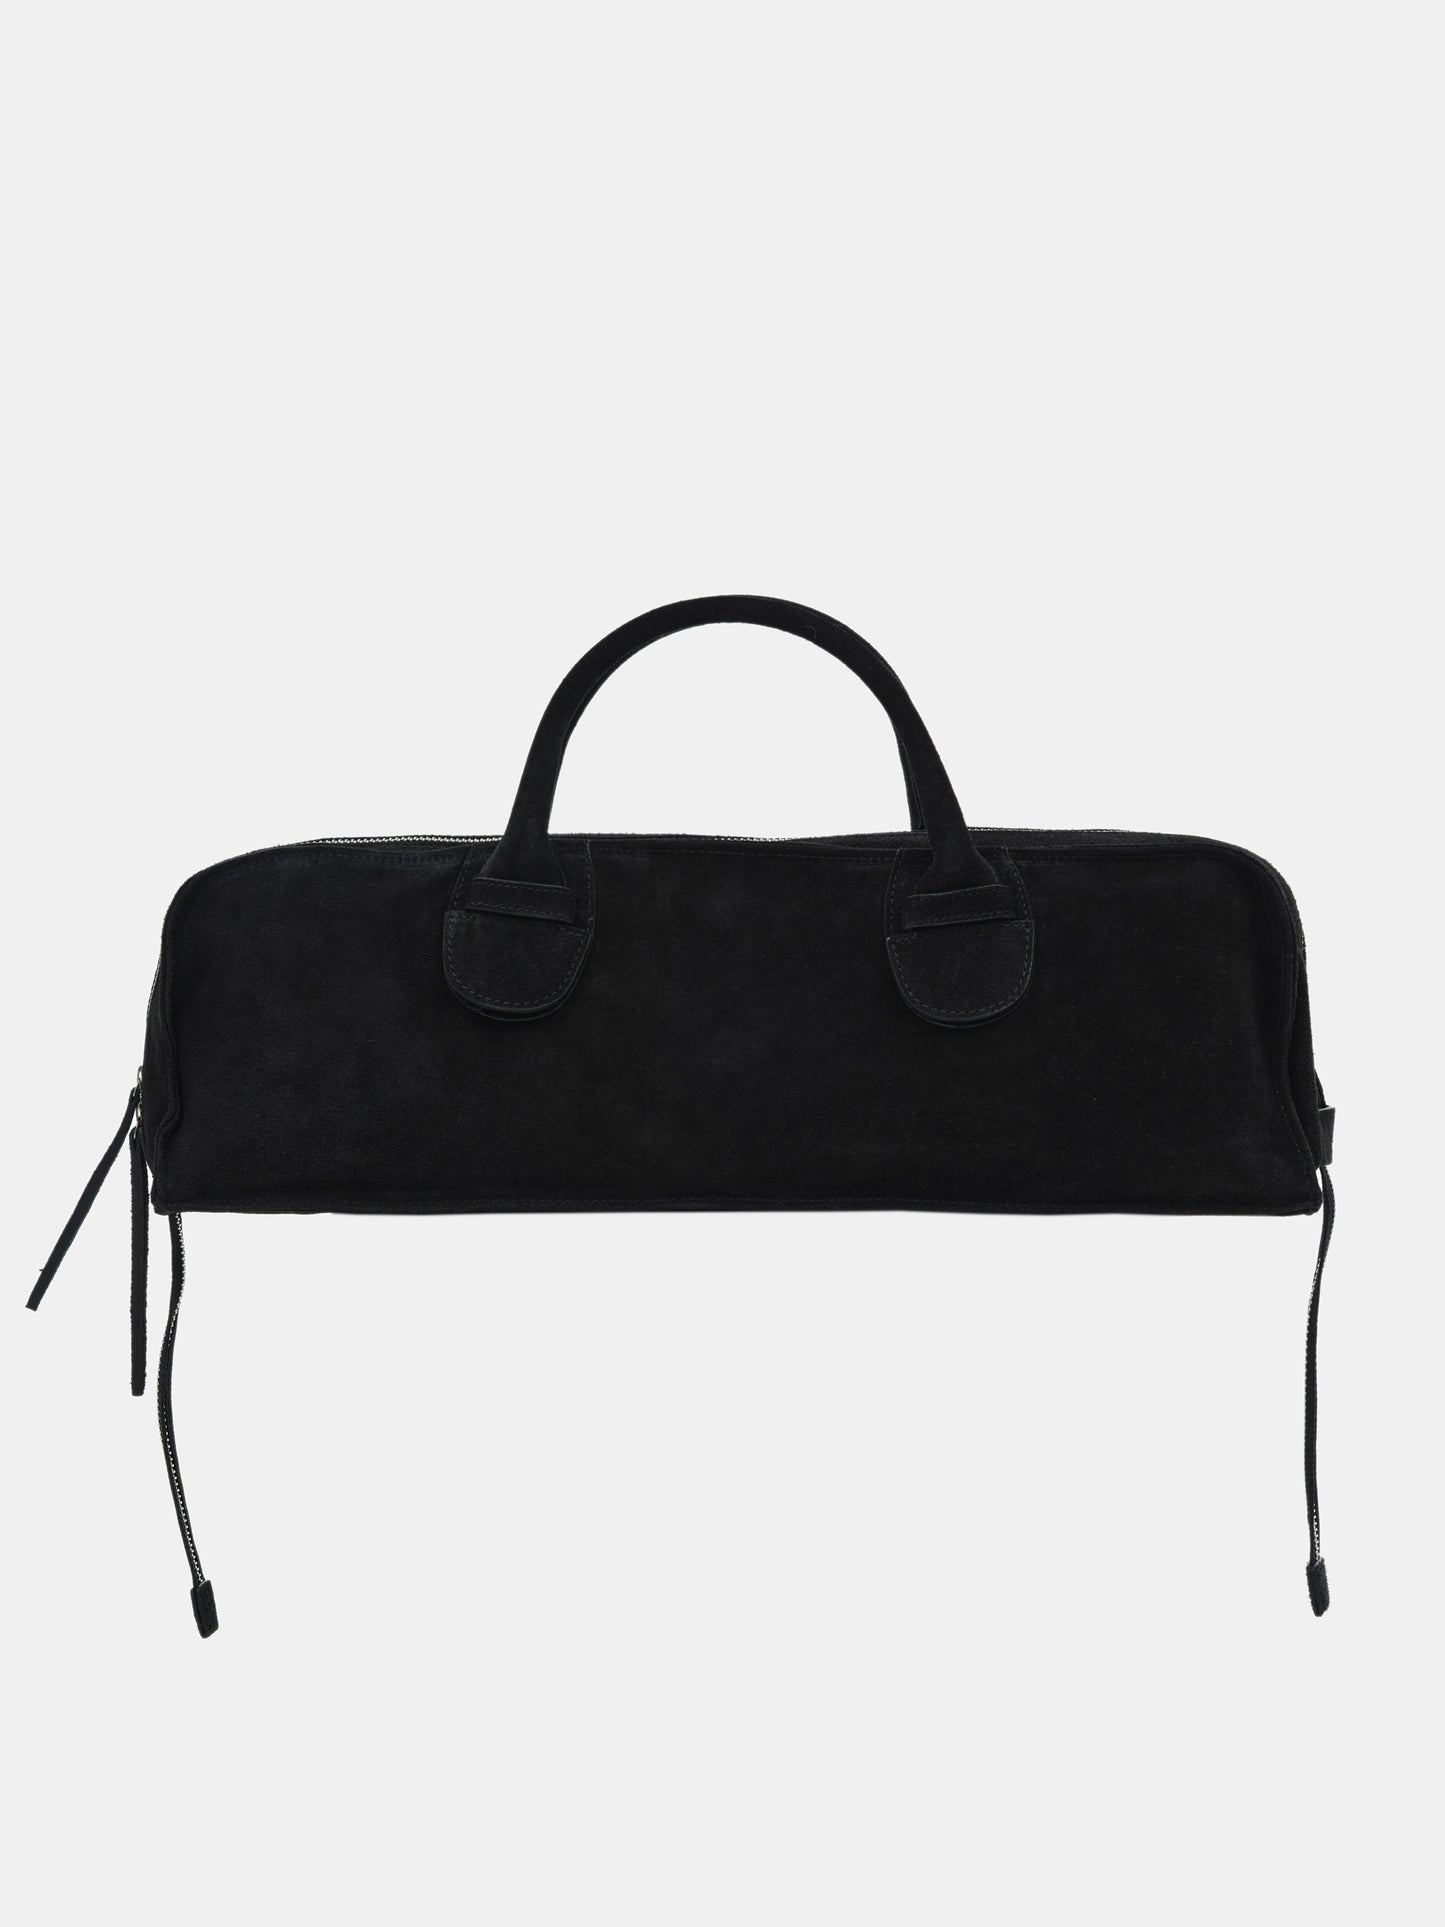 Leather Suede Rectangular Handbag, Black